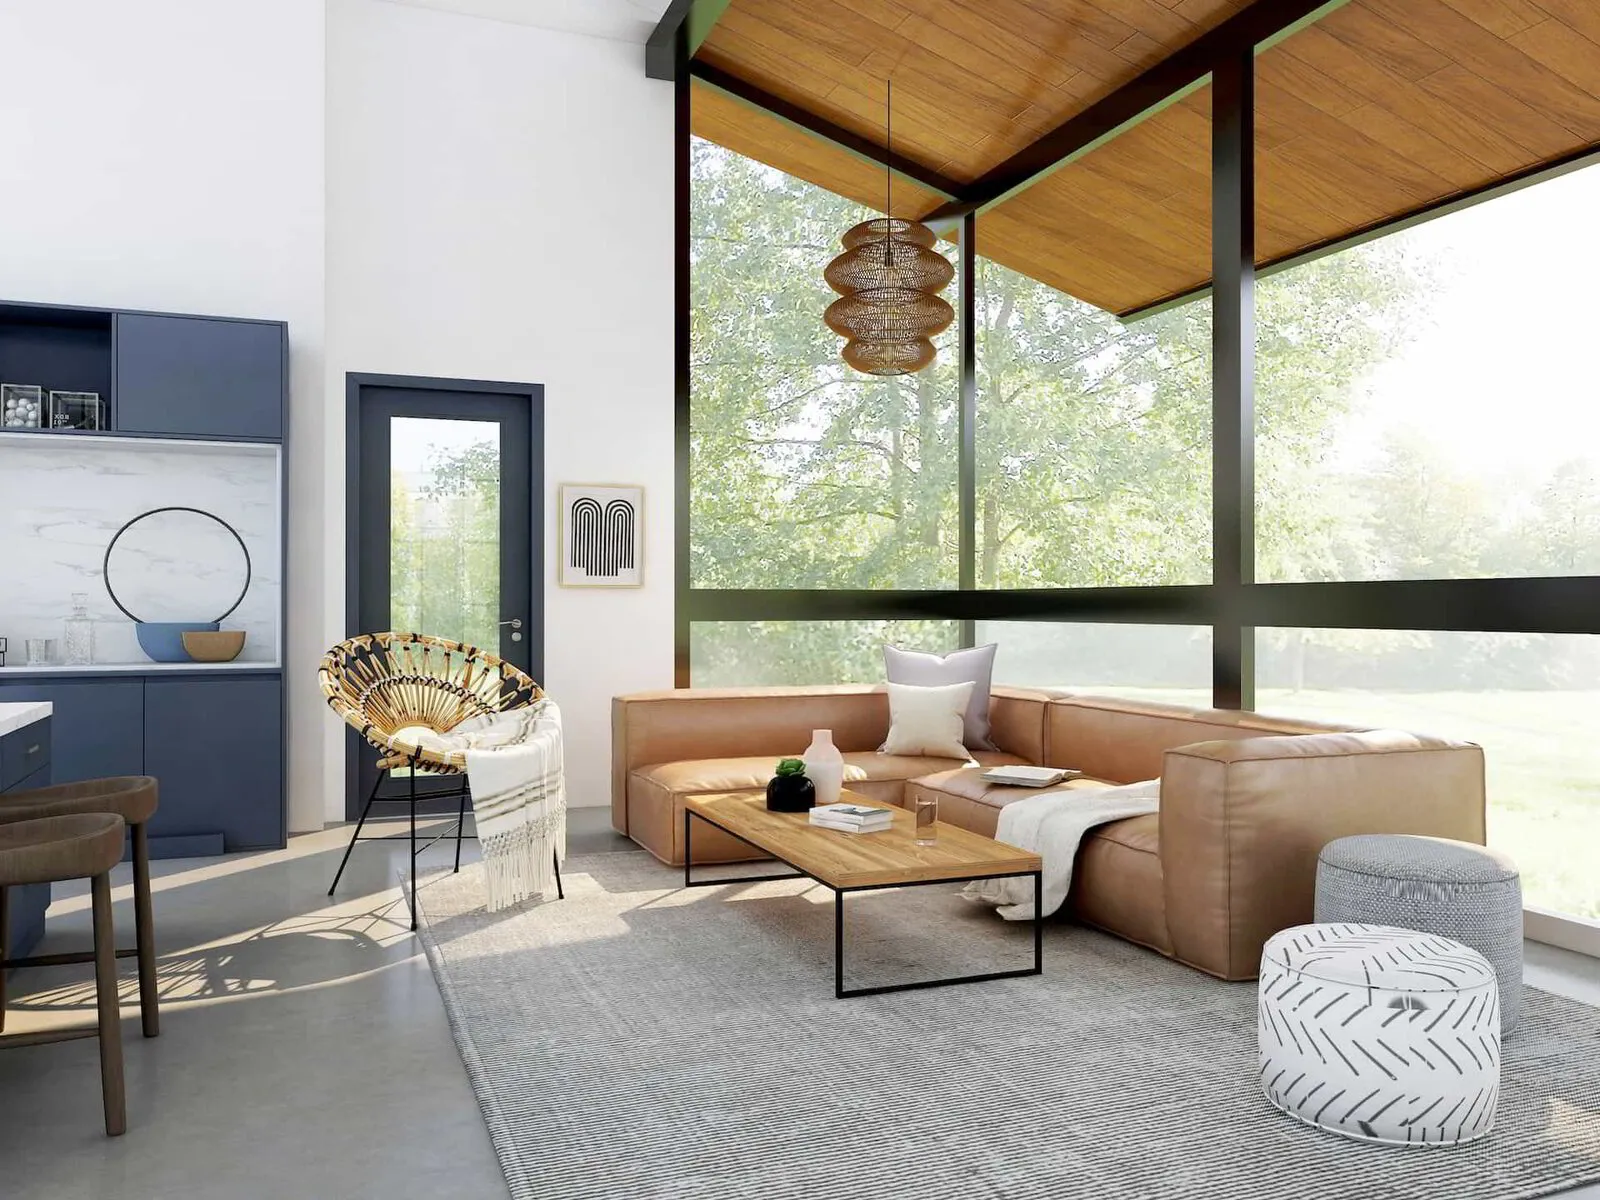 Top 30 Home Interior Design Ideas For A Fresh Look | DIY Home Comfort